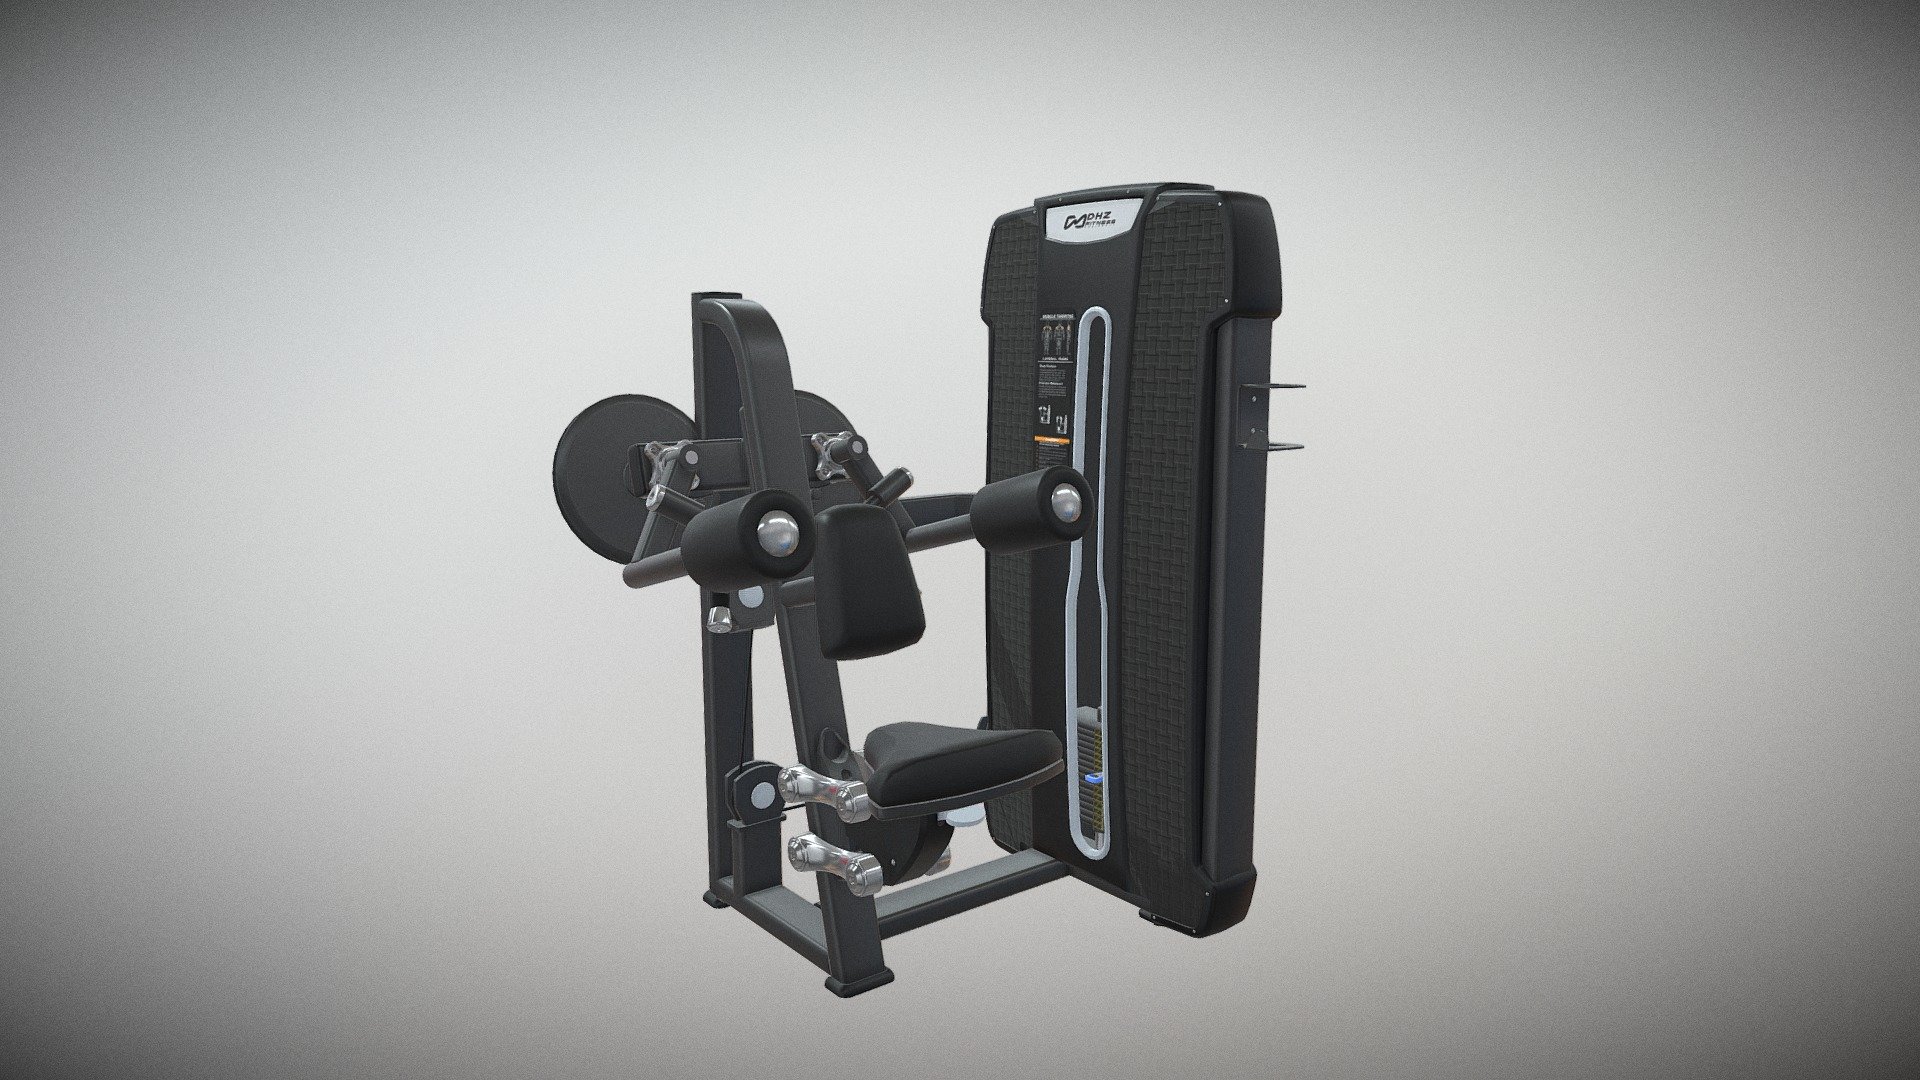 http://dhz-fitness.de/en/style-1#E4005 - LATERAL RAISE - 3D model by supersport-fitness 3d model